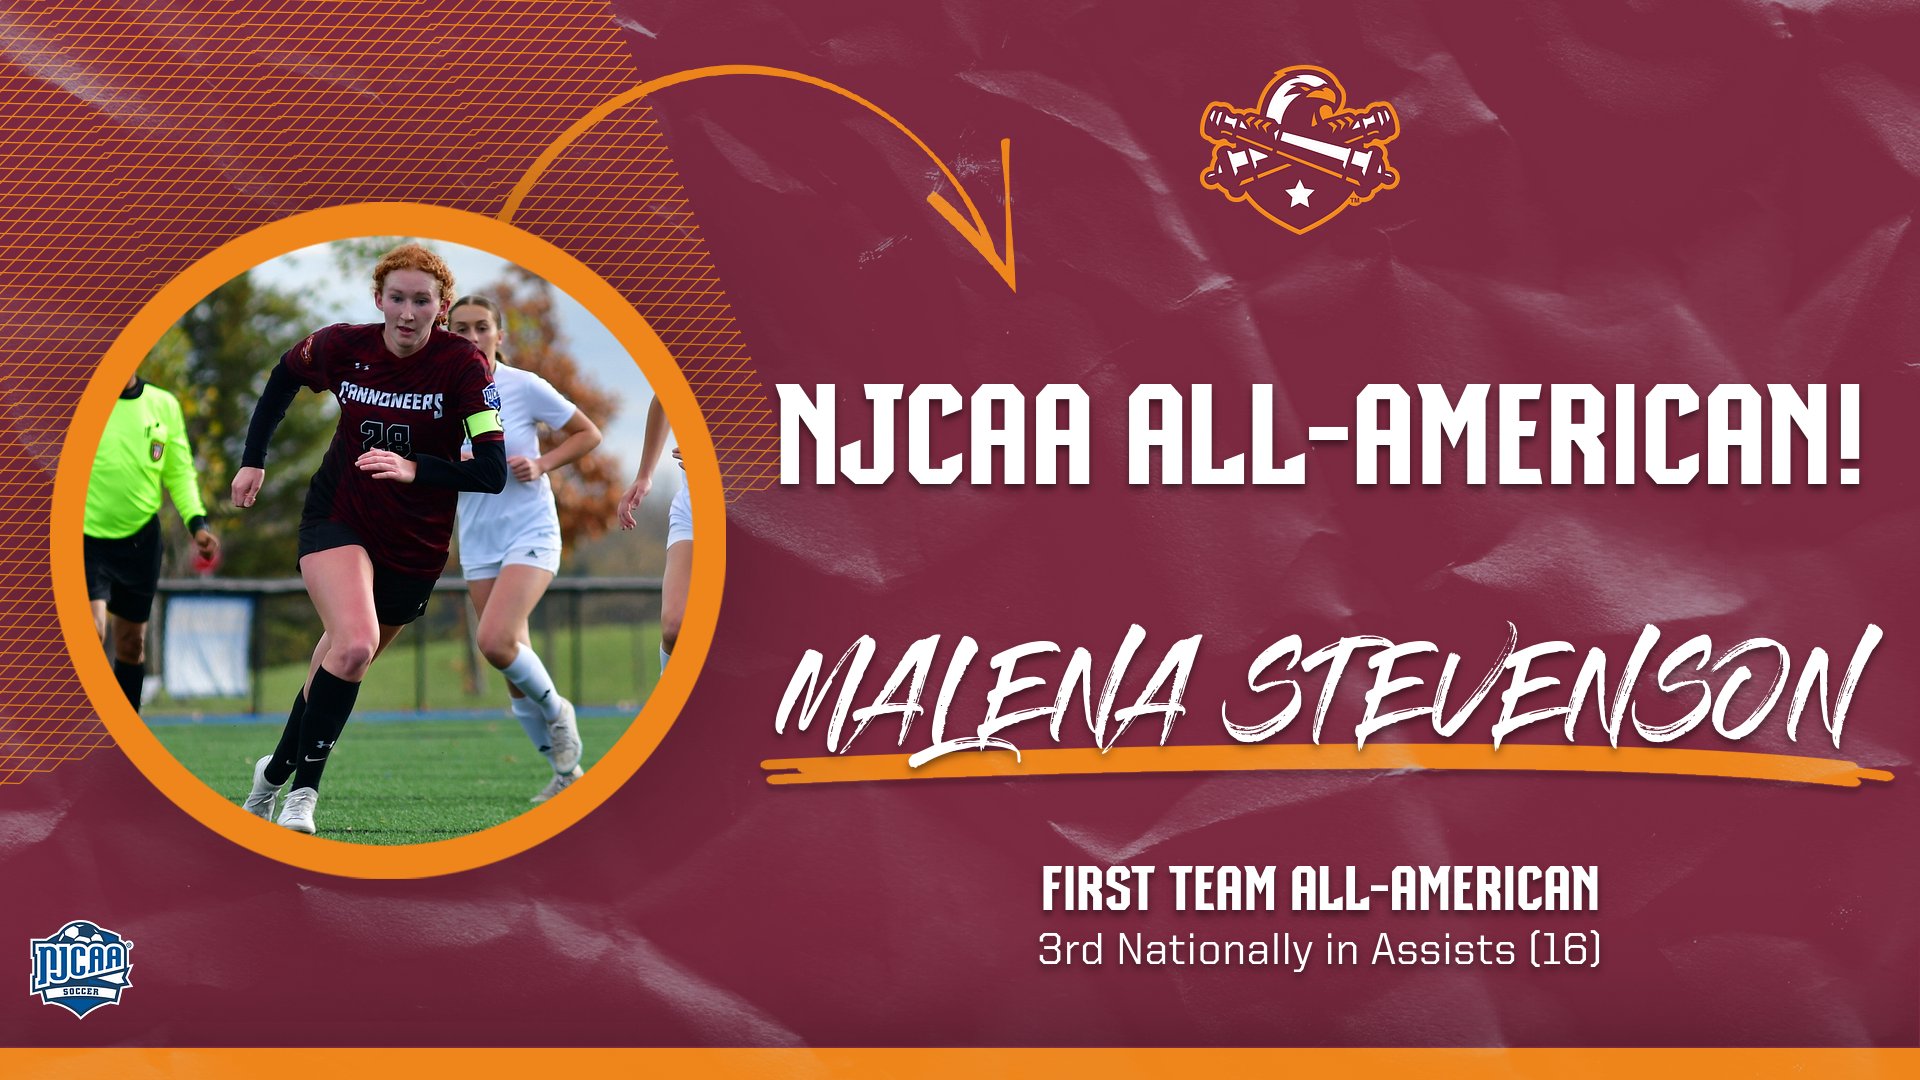 Malena Stevenson All-American 1st team